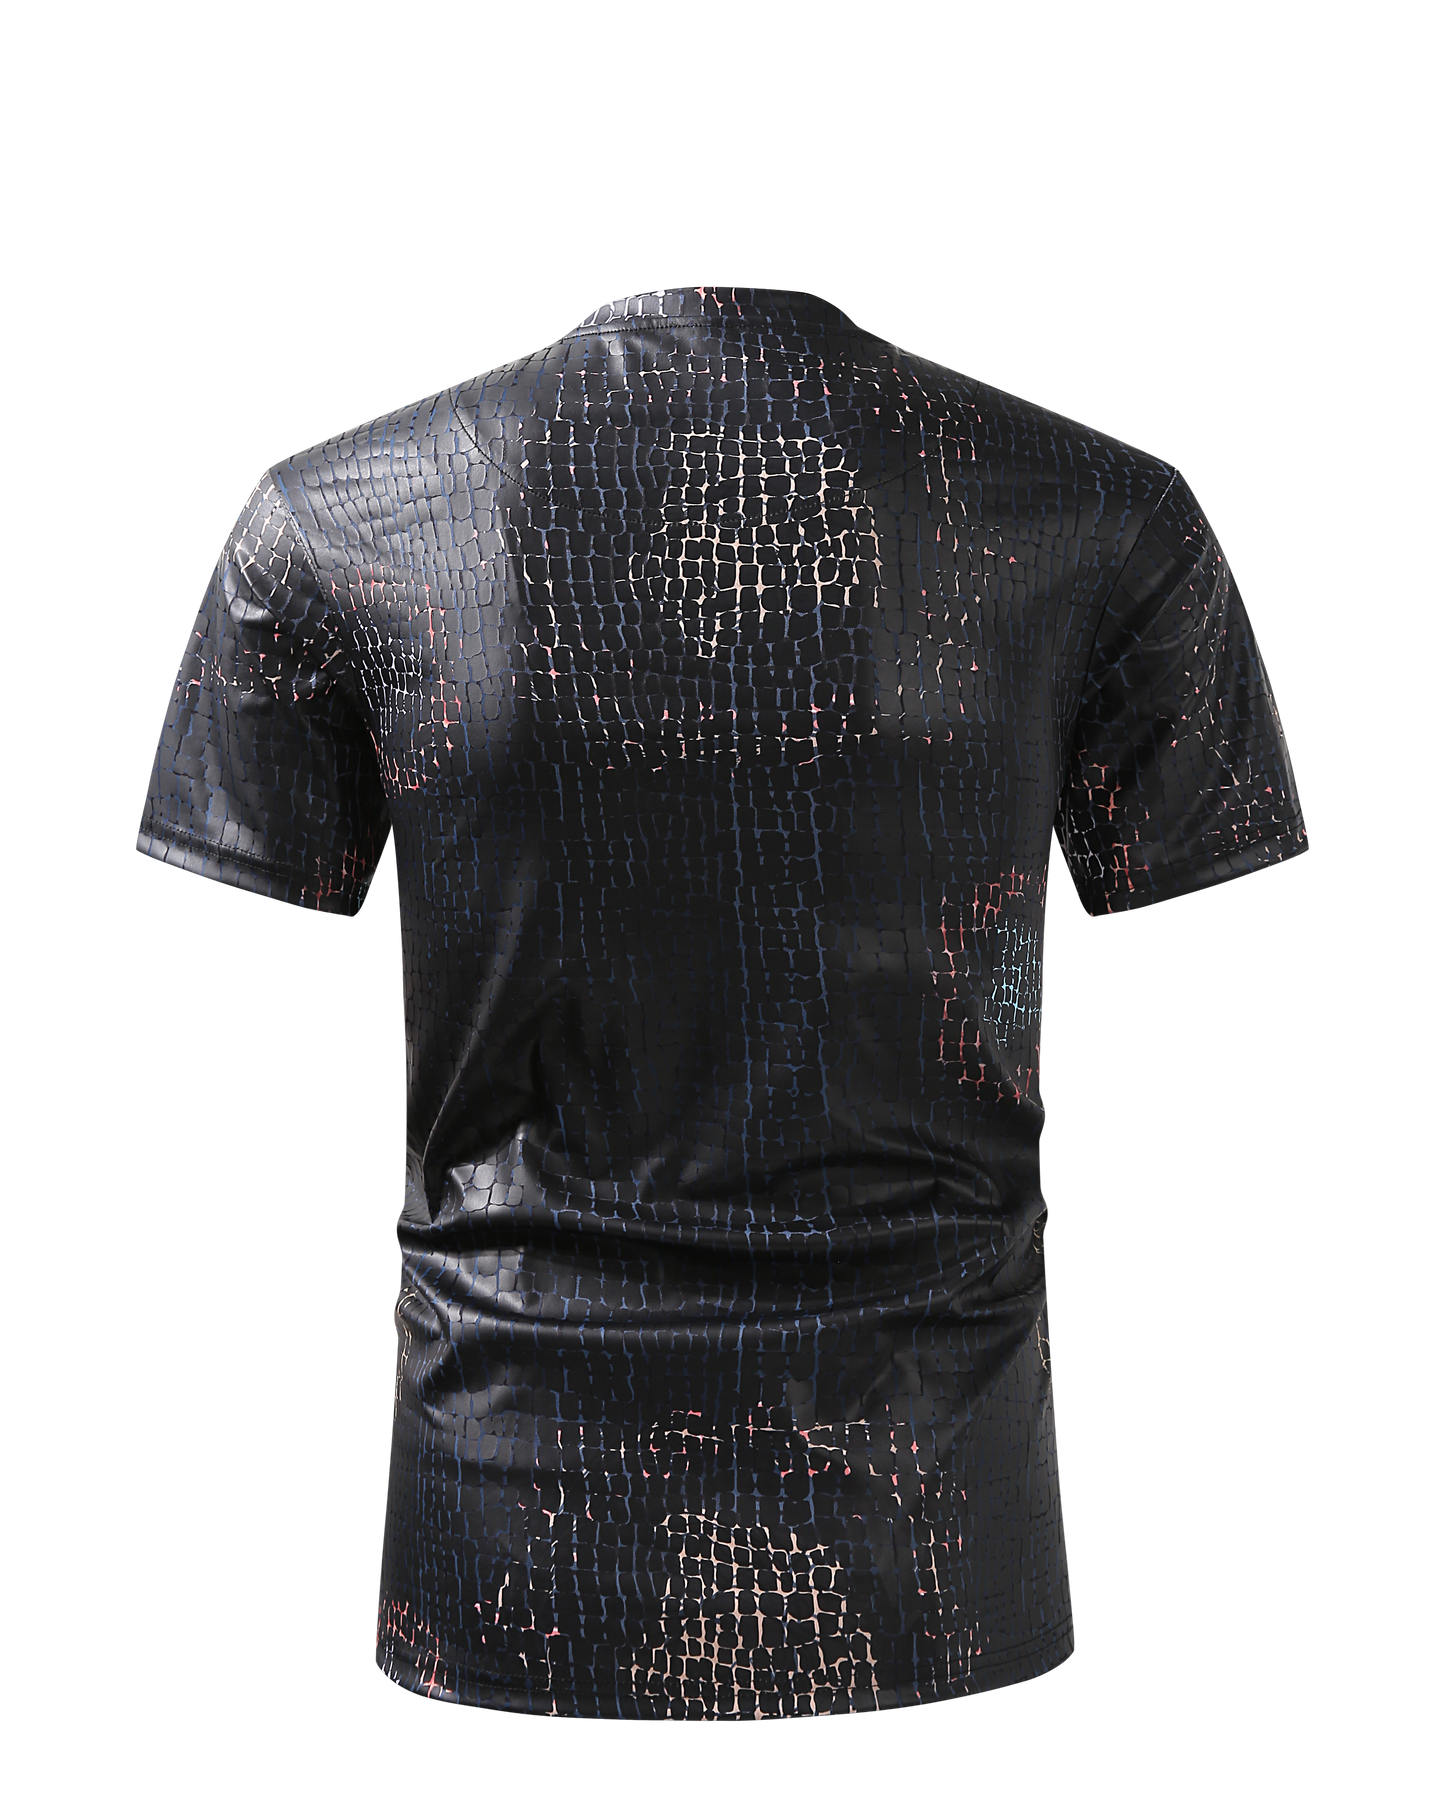 Men PREMIERE SLIM FIT Short Sleeve T SHIRT BLACK GRAY REPTILE CROCODILE SKIN PRINT Designer Shirt